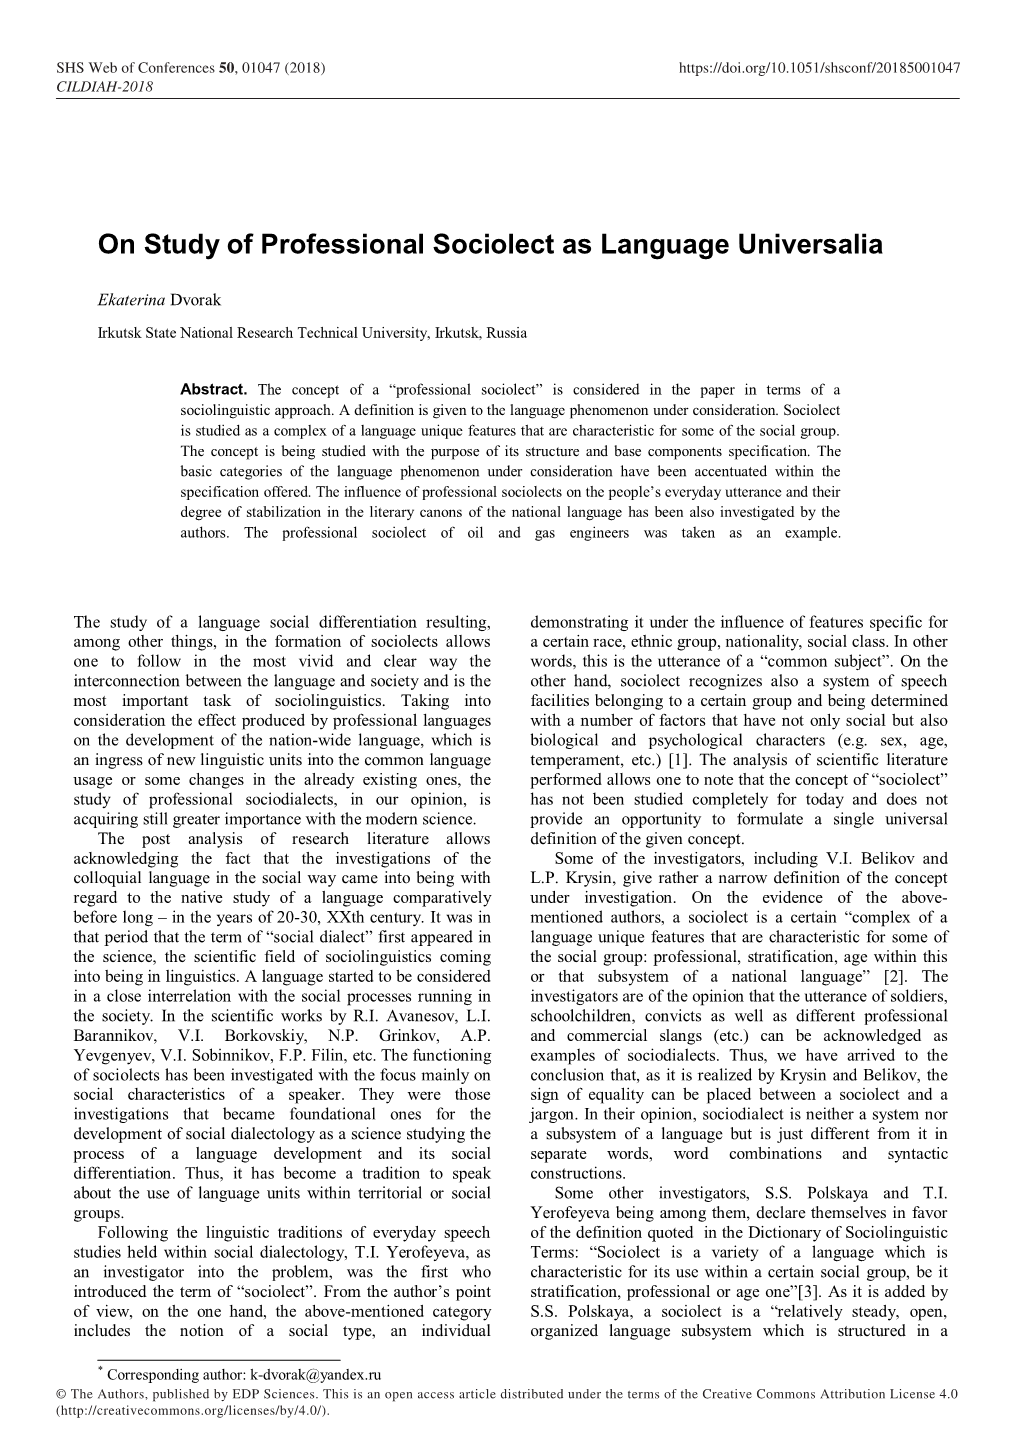 On Study of Professional Sociolect As Language Universalia